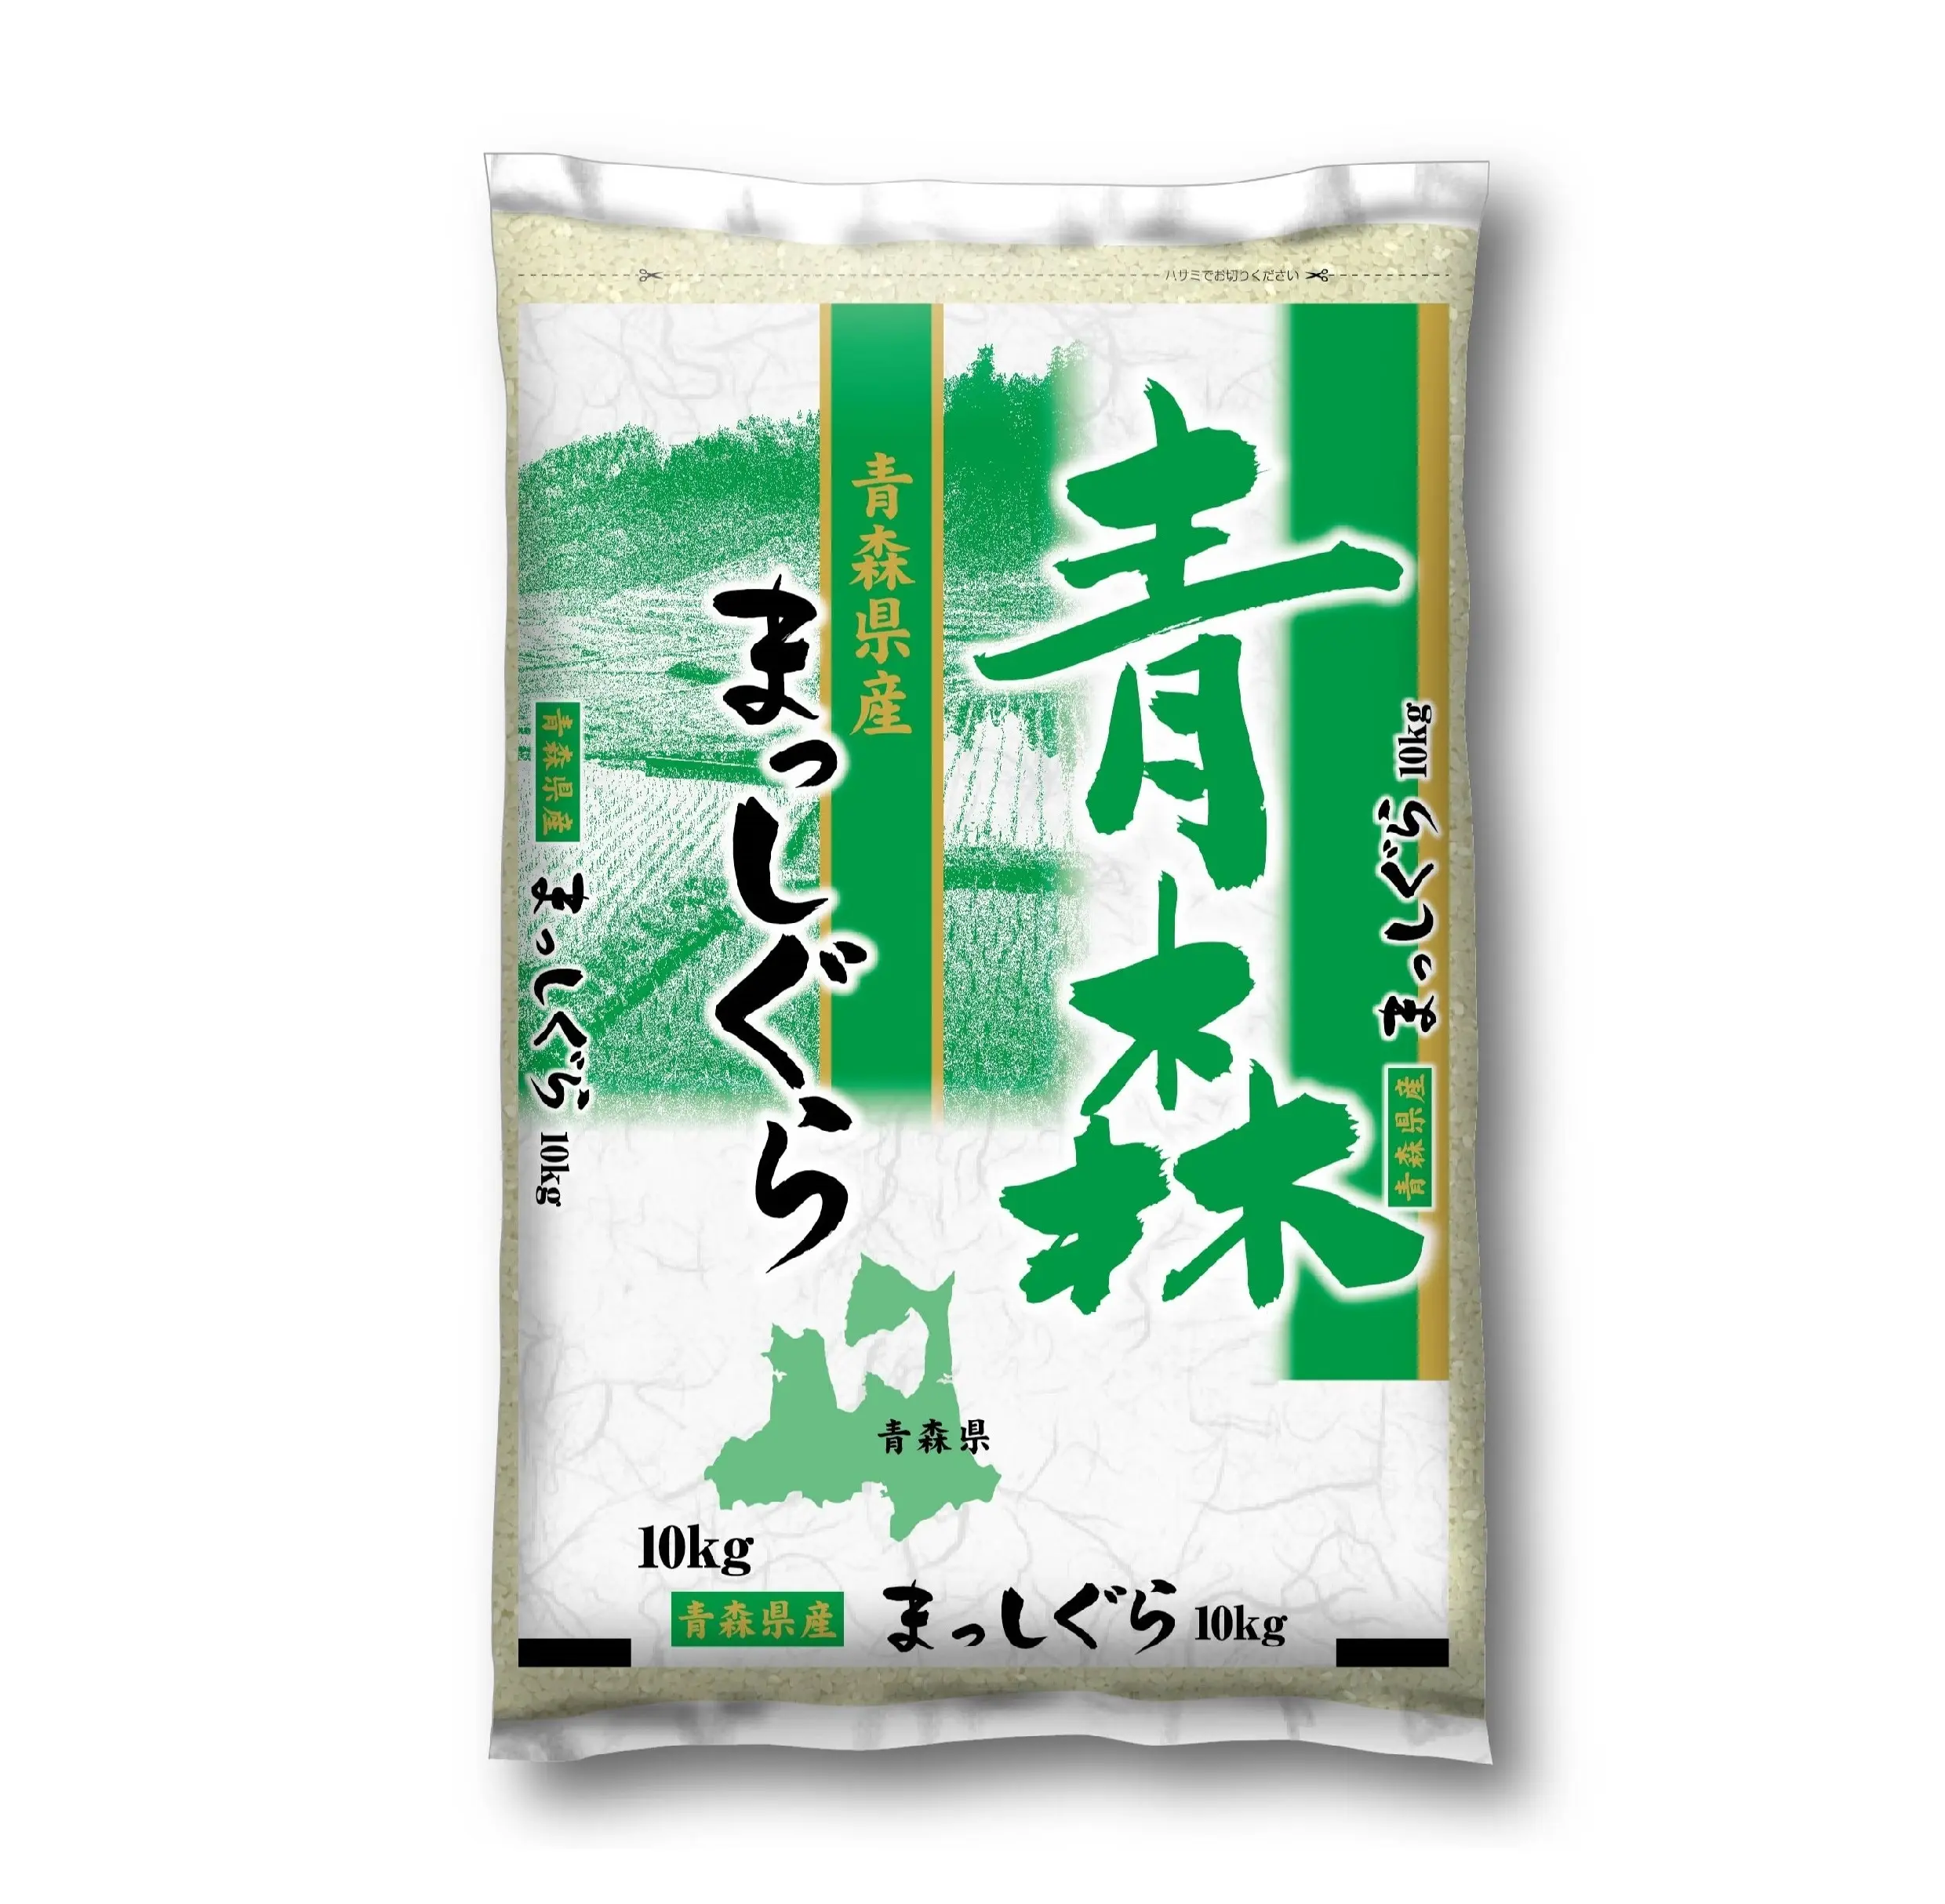 Aomori Masshigura ekspor tradisional grosir beras putih grosir